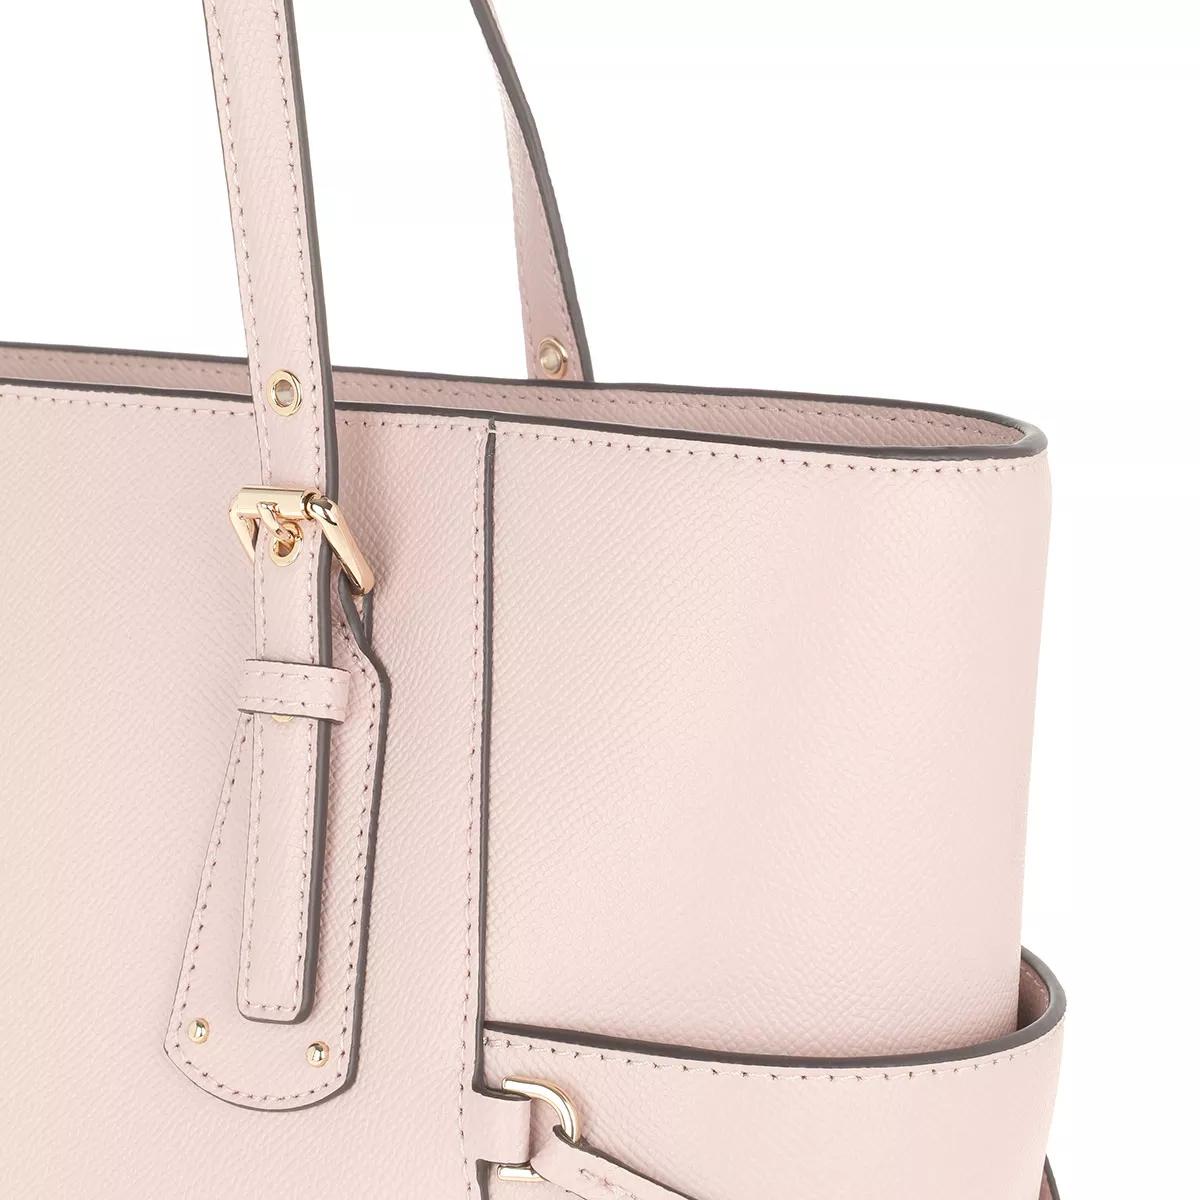 Michael Kors Bags | Michael Kors Large Charlotte Tote Bag | Color: Gold/Pink | Size: Os | Exclusiveshop62's Closet